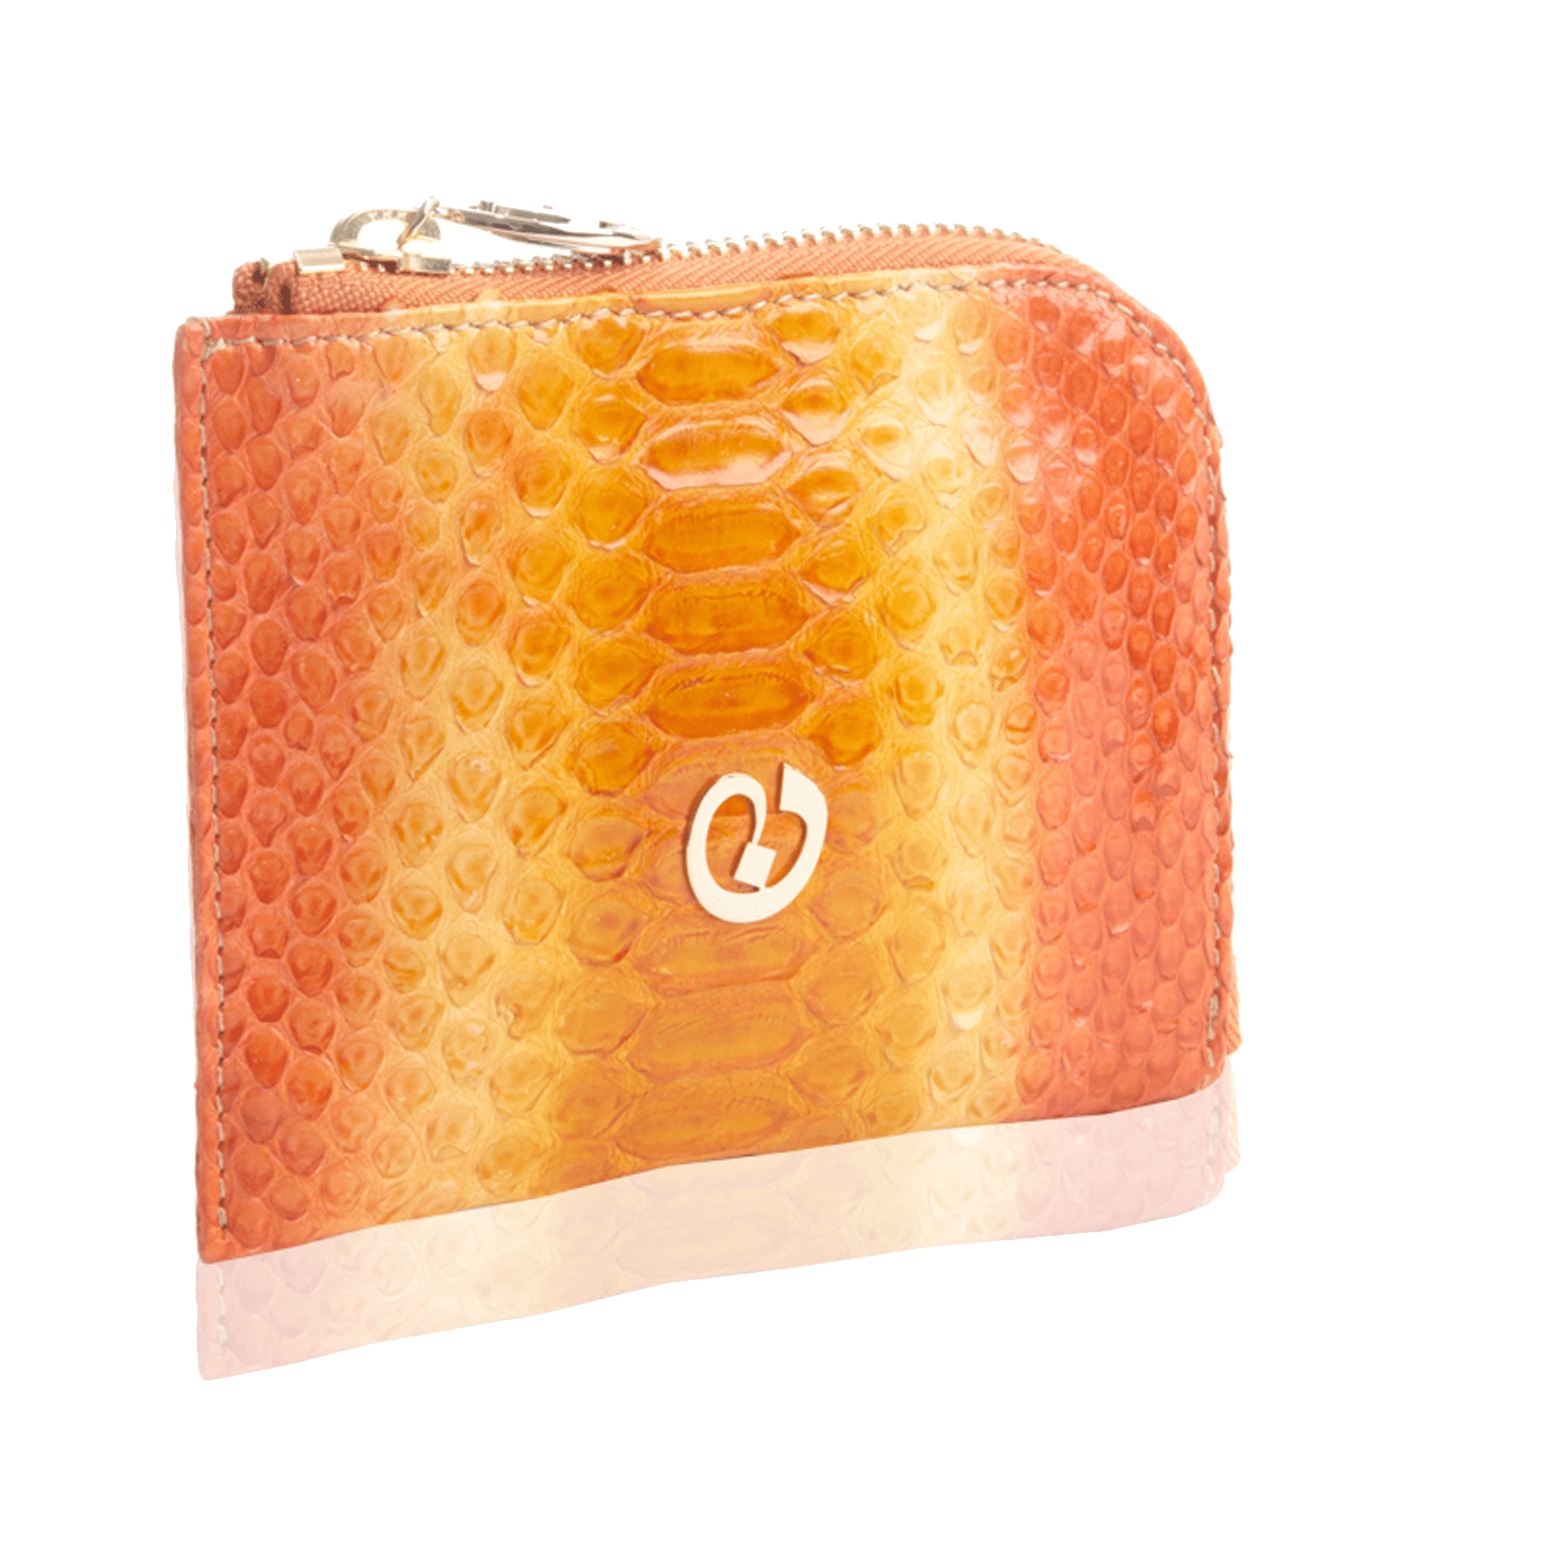 FL by NADA SAWAYA Wallet Orange / Light gold Small Square Zip-Around Python Wallet